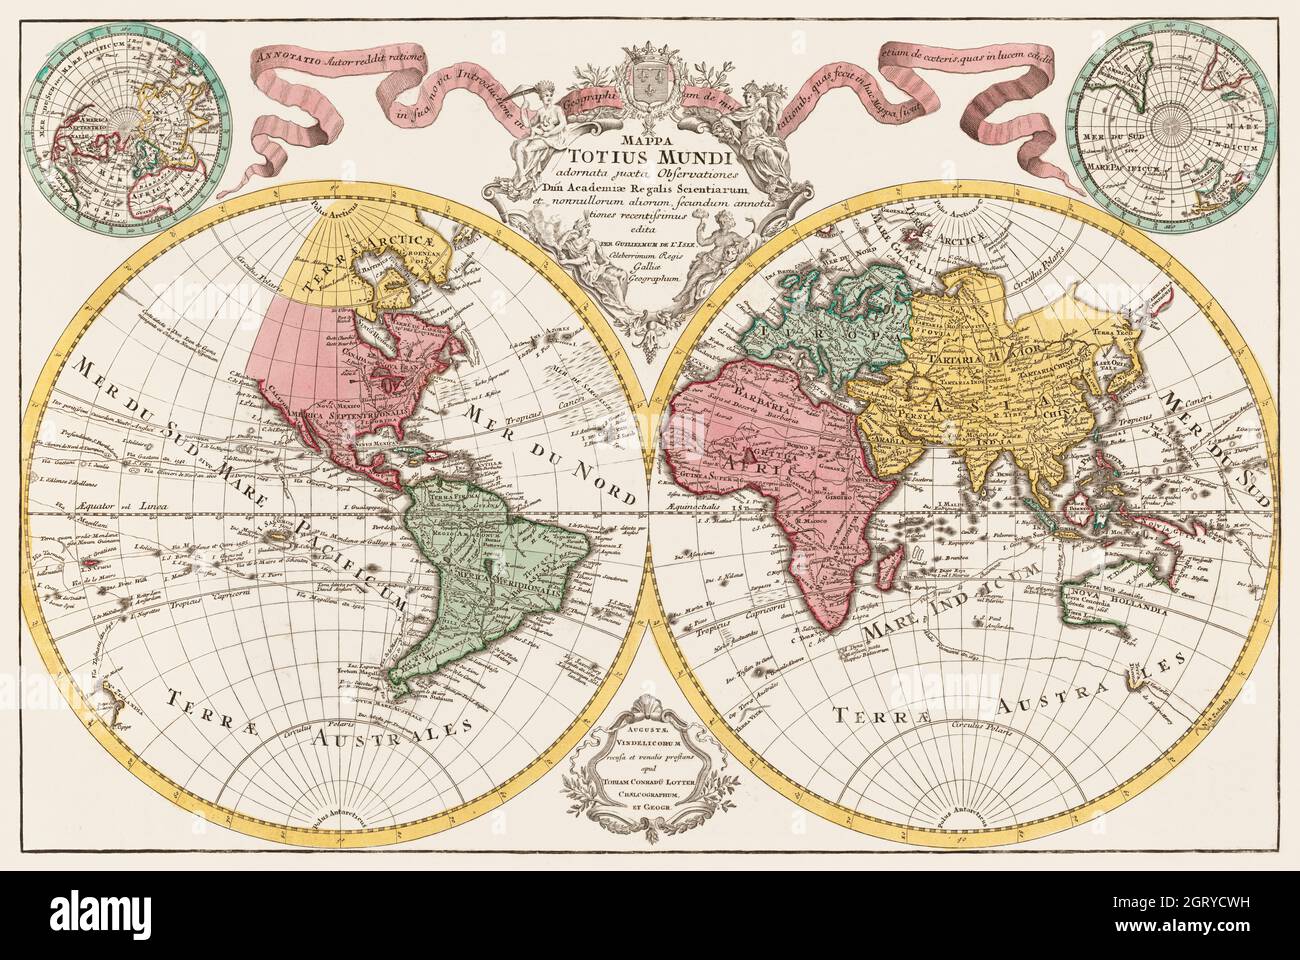 Mappa totius mundi - Map of the World (1775) Stock Photo